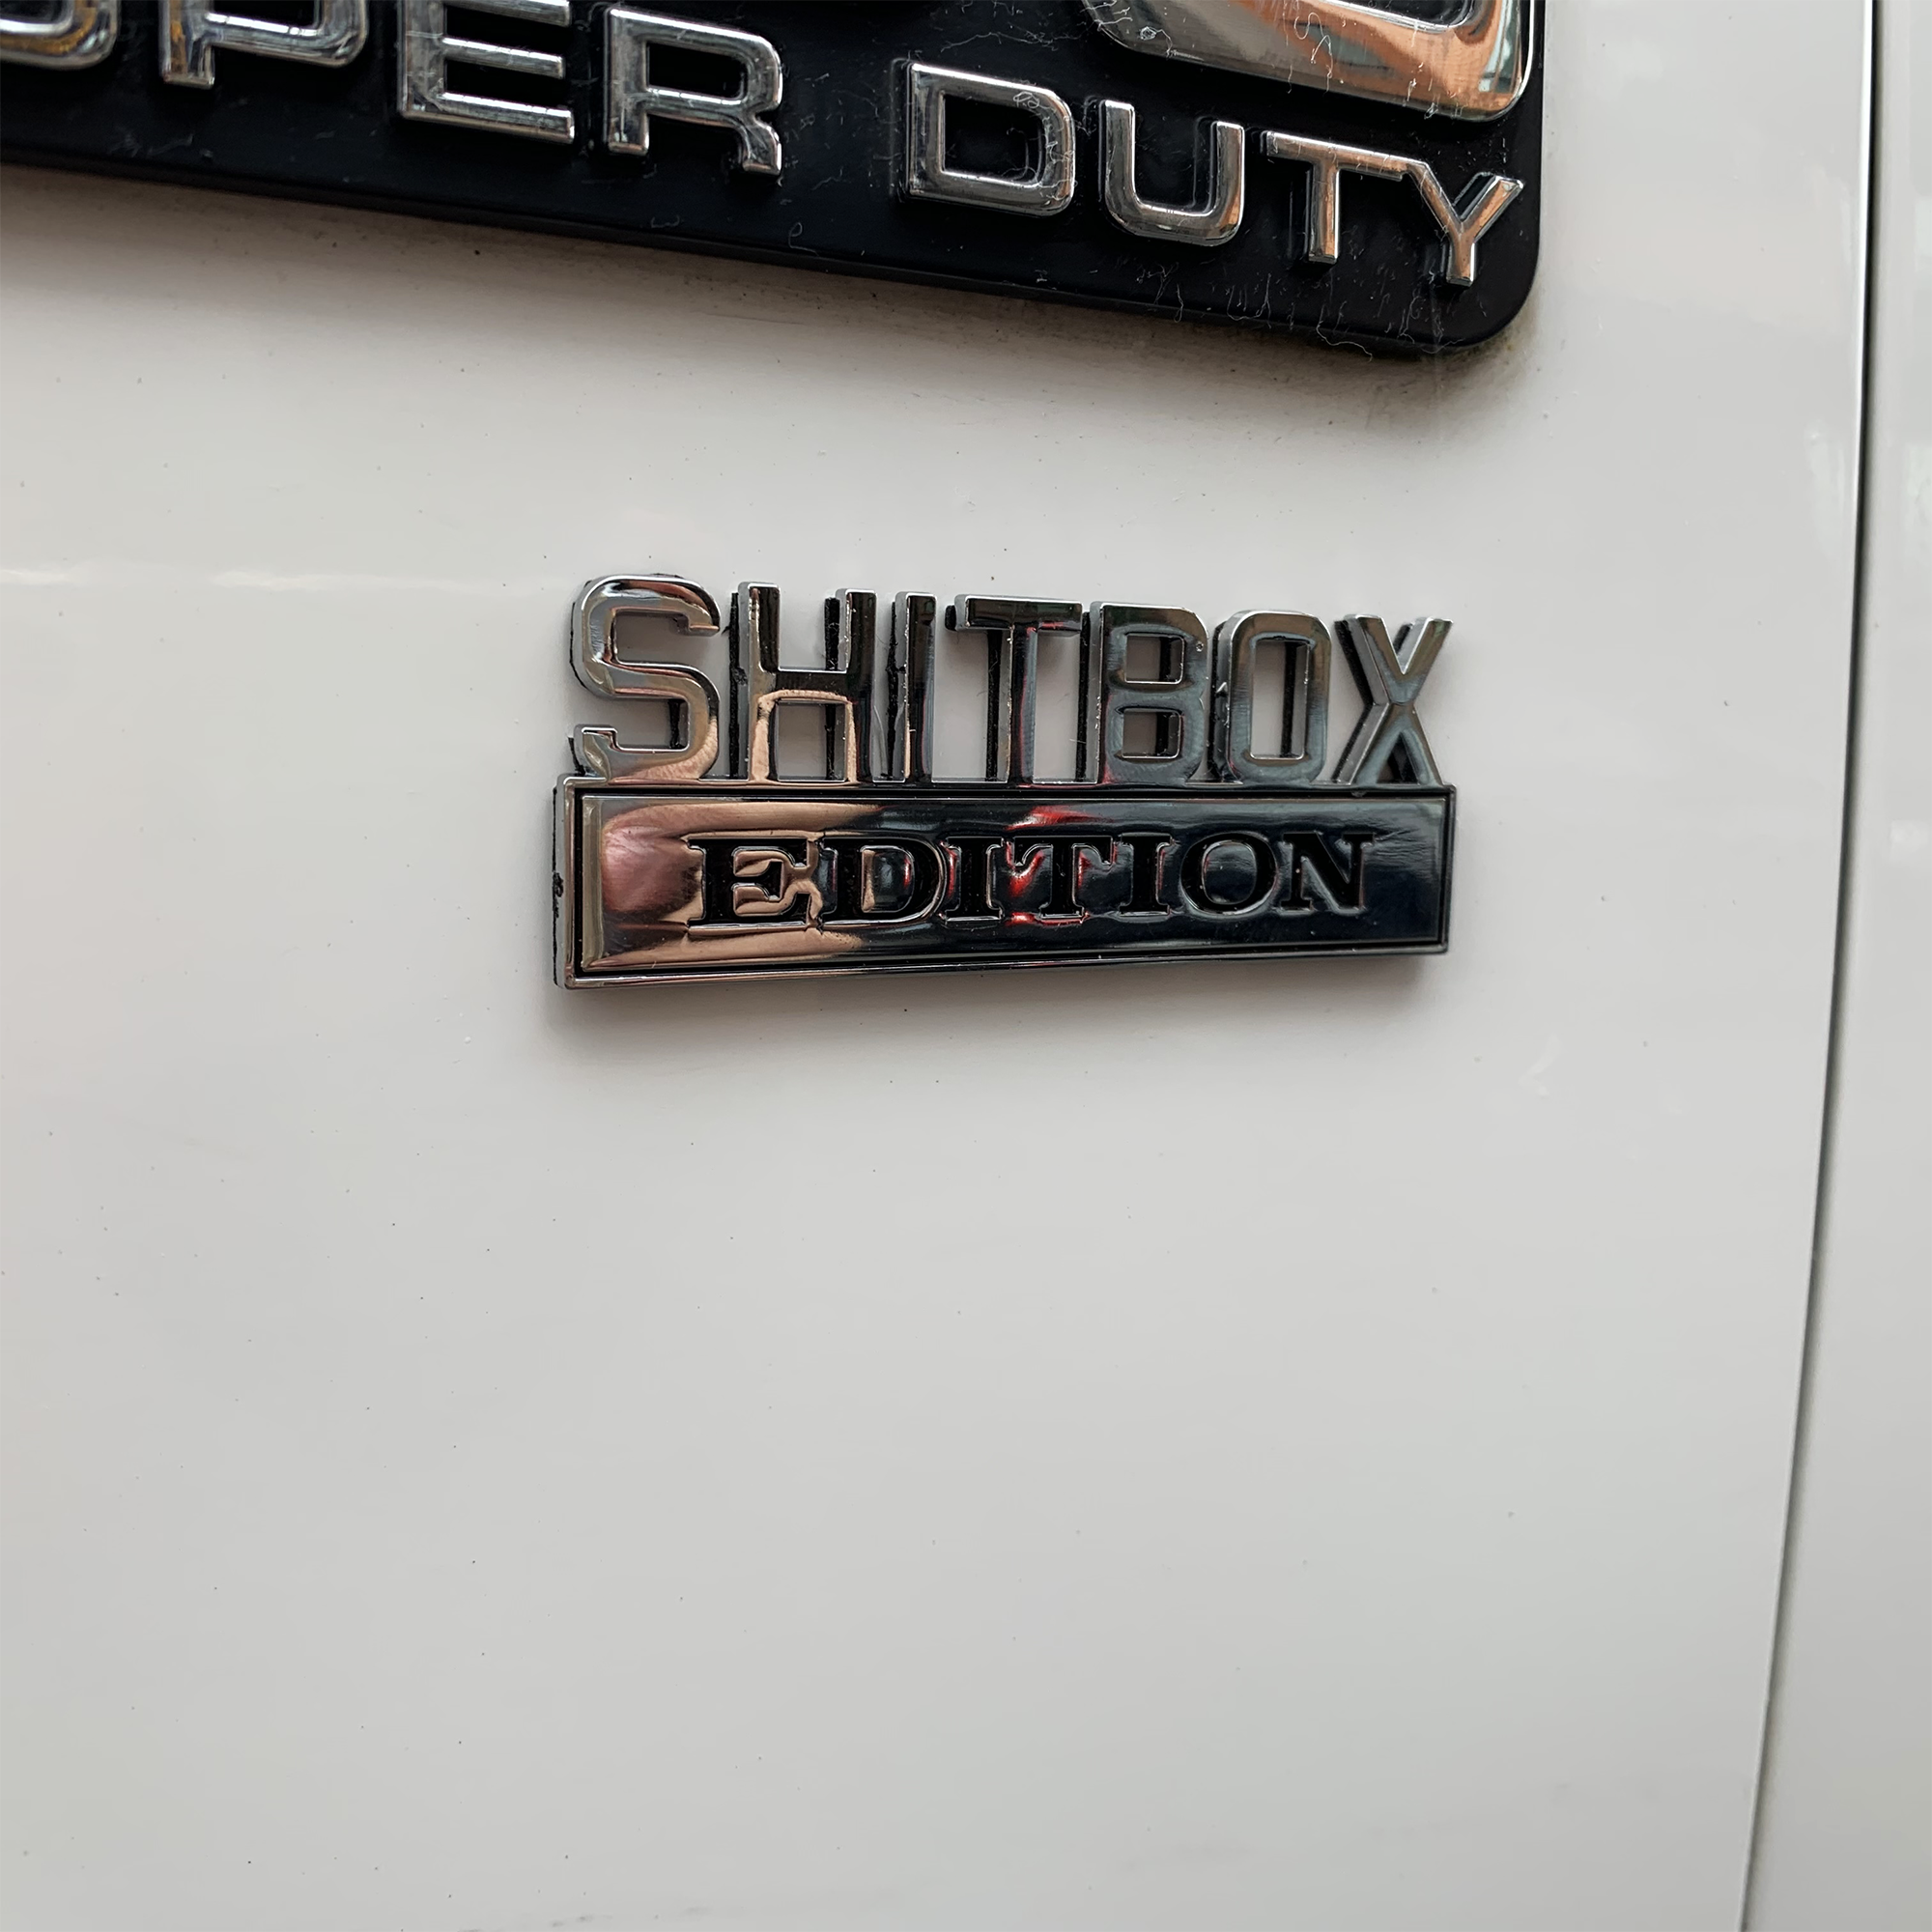 Shitbox Edition Metal Emblem Installed on Door